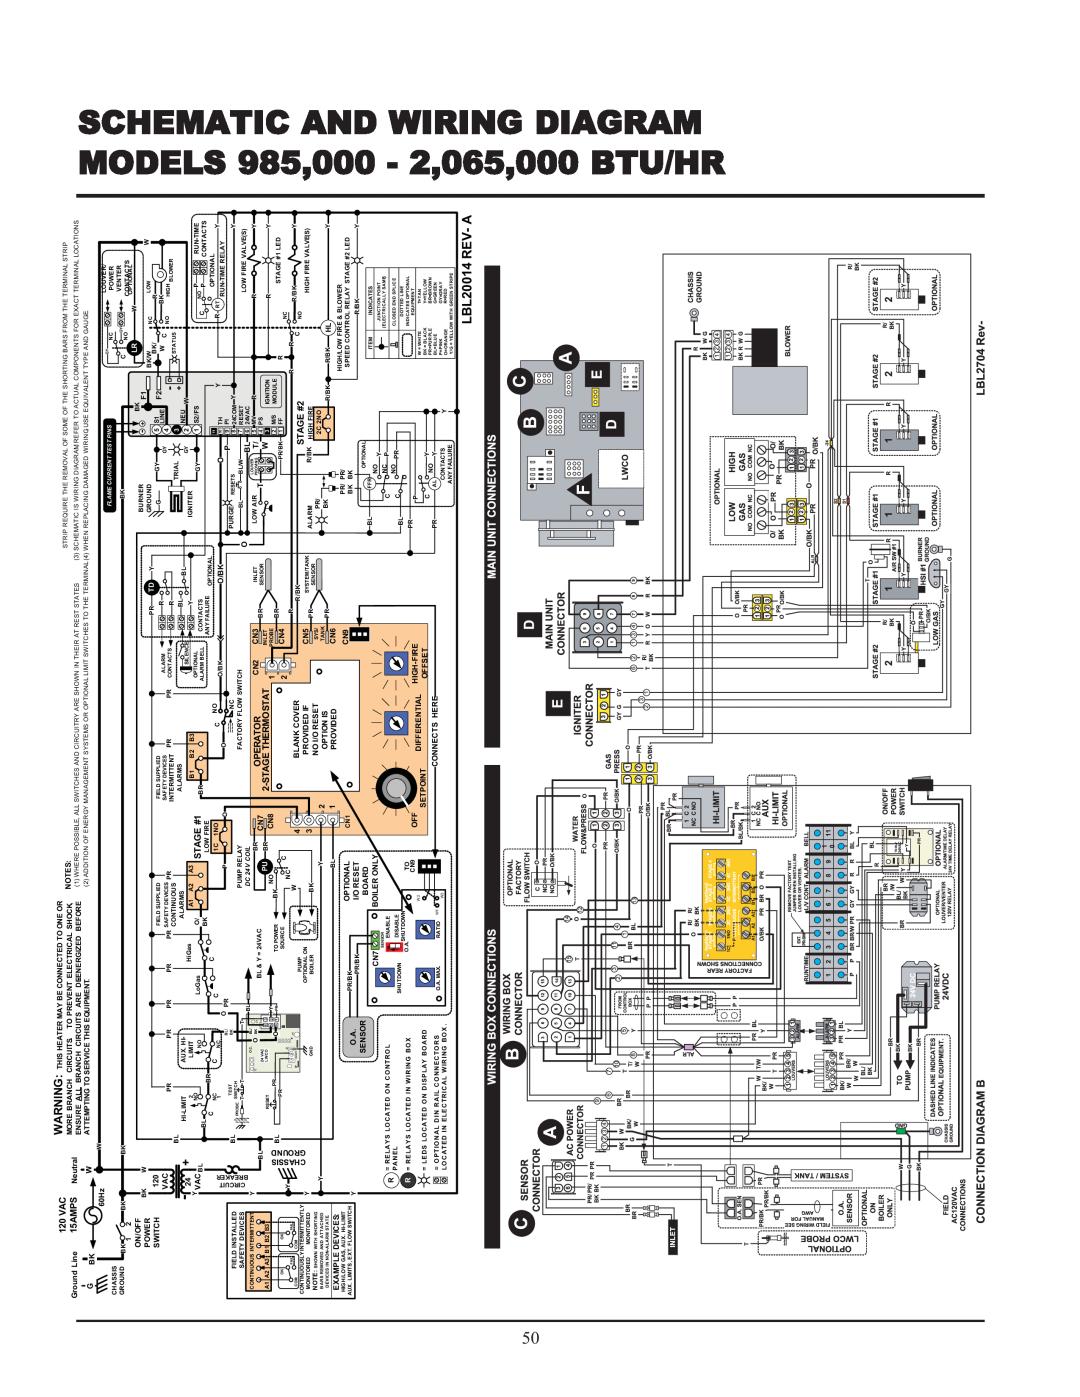 Lochinvar 000 - 2, 495 service manual MODELS 985,000, 2,065,000 BTU/HR, Wiring Diagram, Schematic And, LBL20014 REV- A 